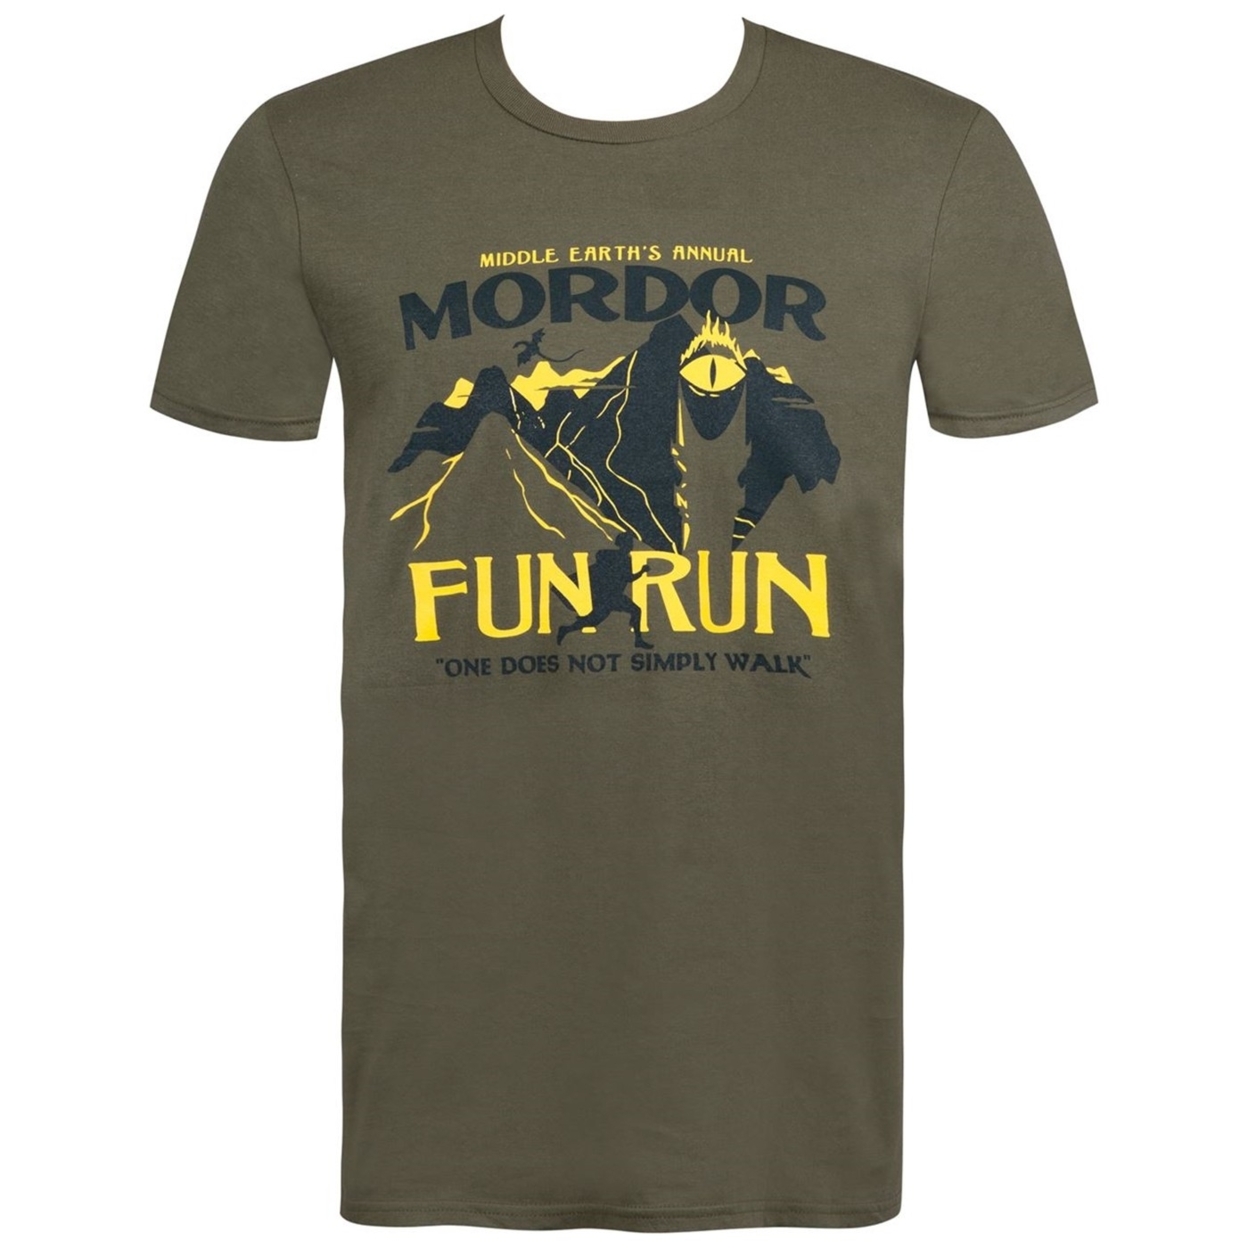 Lord of the Rings Mordor Fun Run Mens T-Shirt